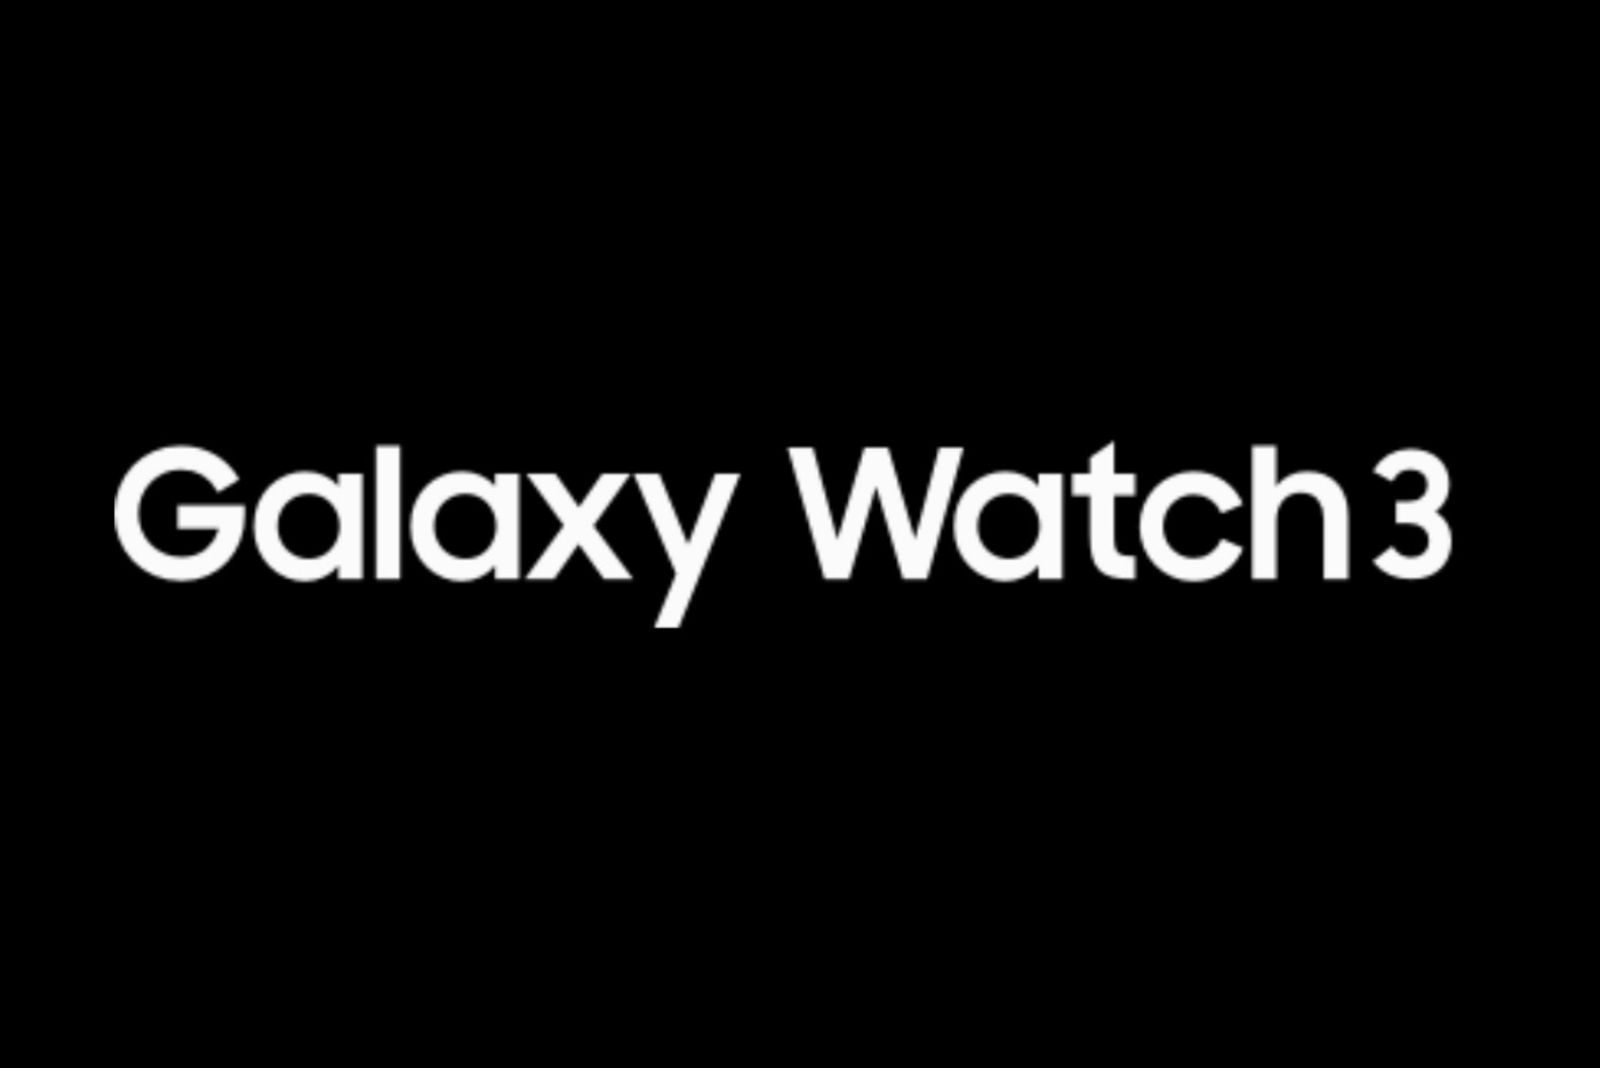 Samsung Galaxy Watch 3 image 2